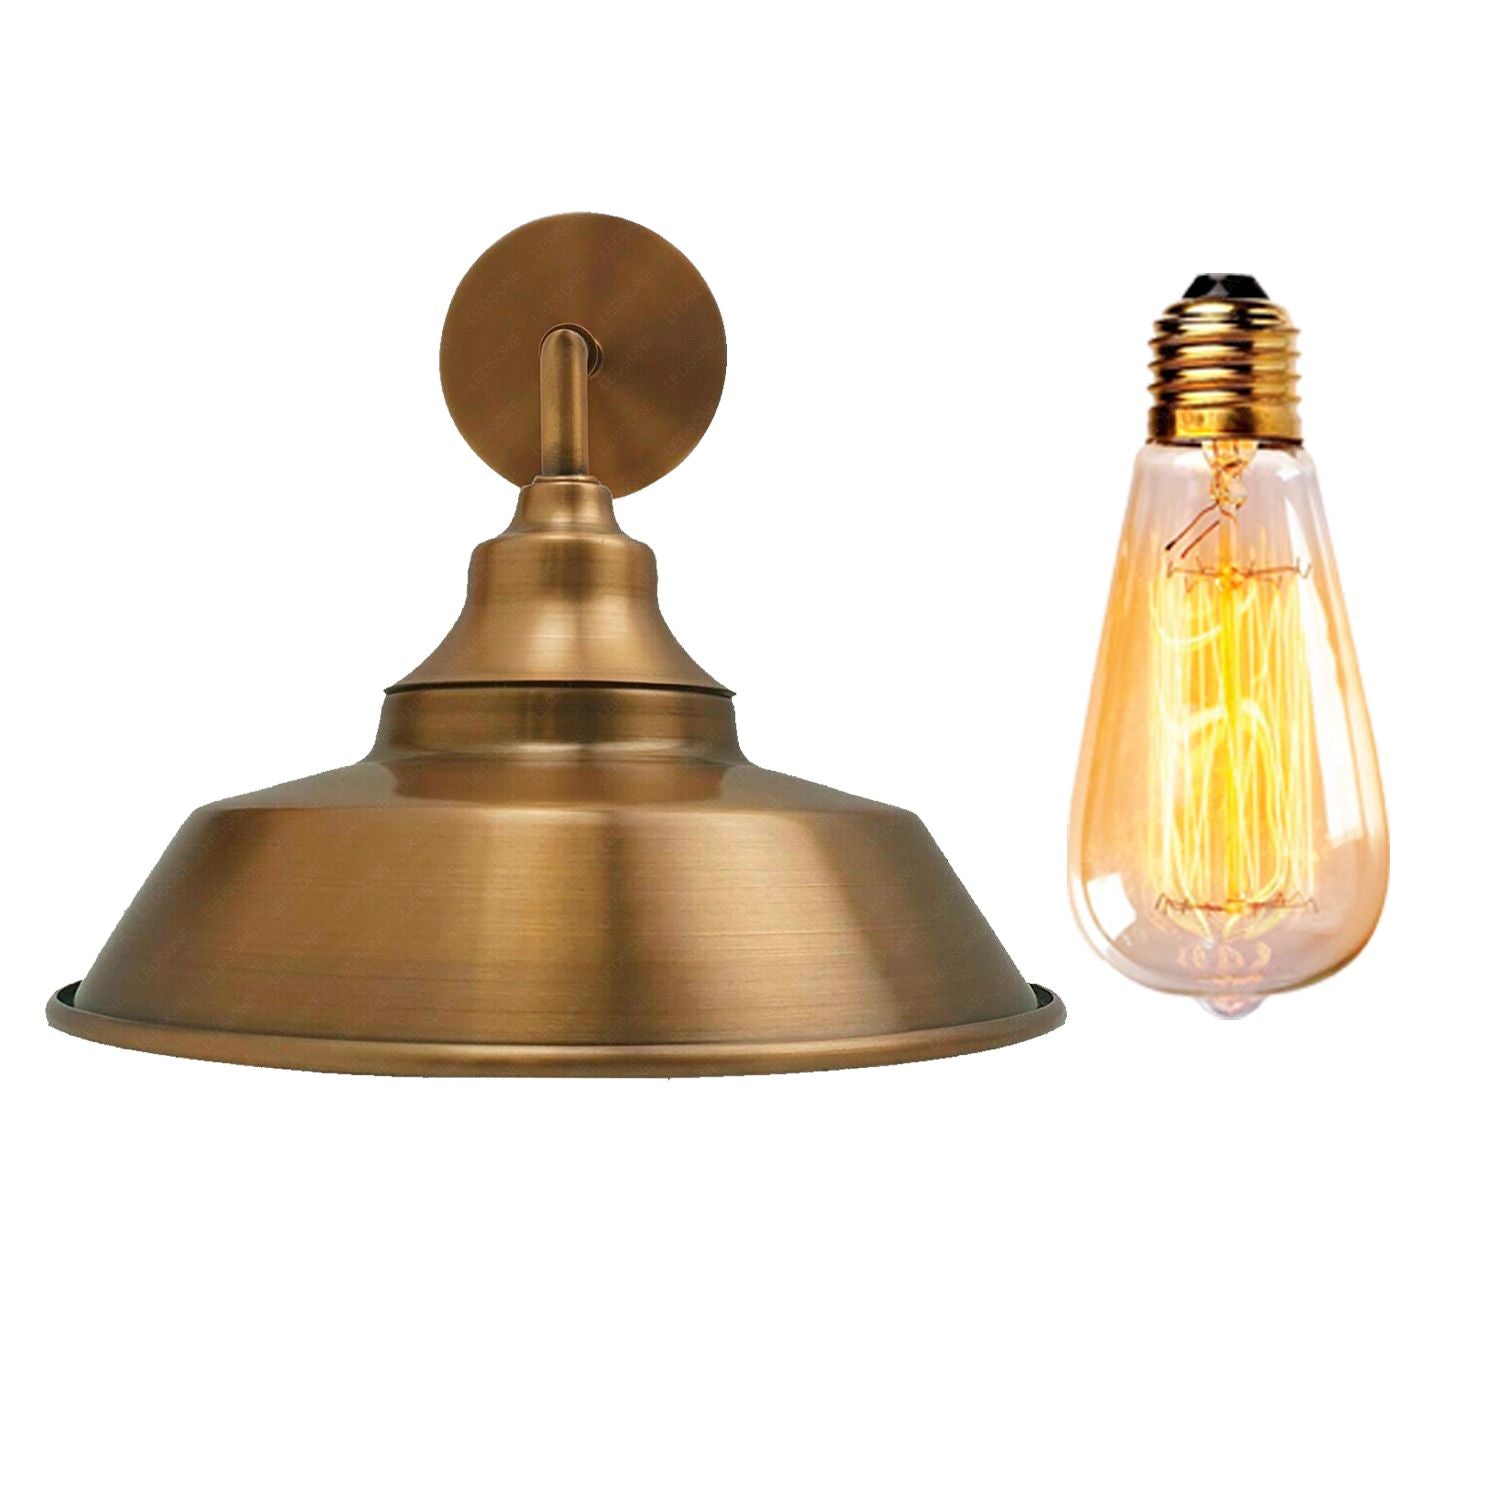 Vintage Retro Wall Lamp Indoor E27 Edison  Industrial Lighting Sconces Lights for Kitchen Bar Living Room Cafe Wall Light